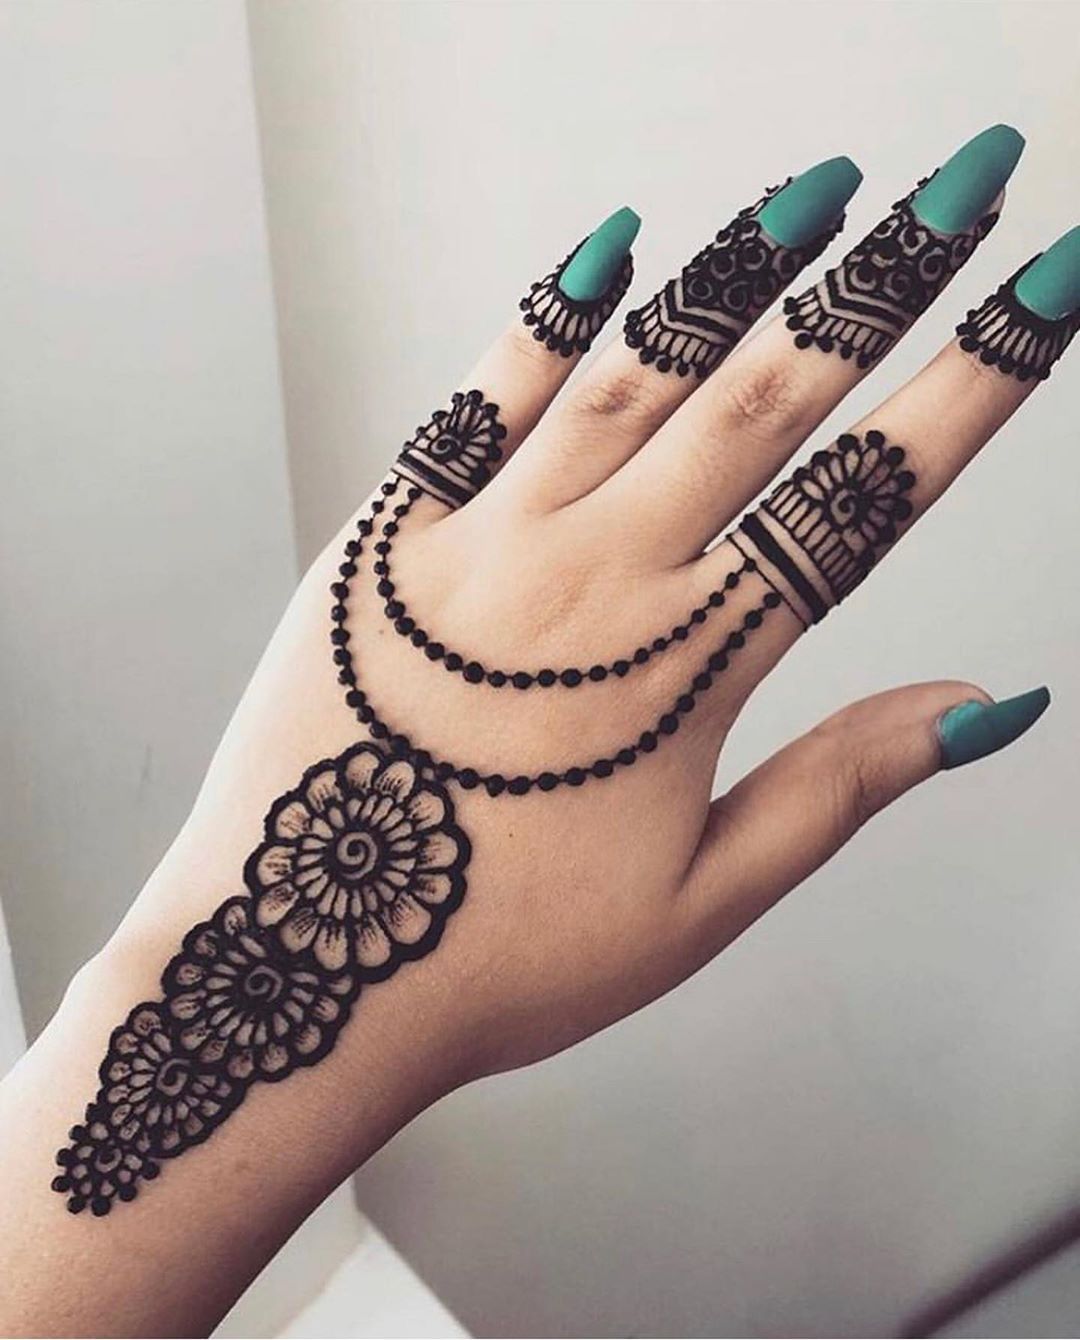 Pakistani Bride on Instagram: “Henna inspo for every occasion ??? Henna artist: @mehndiartist_hira ✨ #pakistanibride #hennadesigns #mehndidesigns #mehendidesigns…”